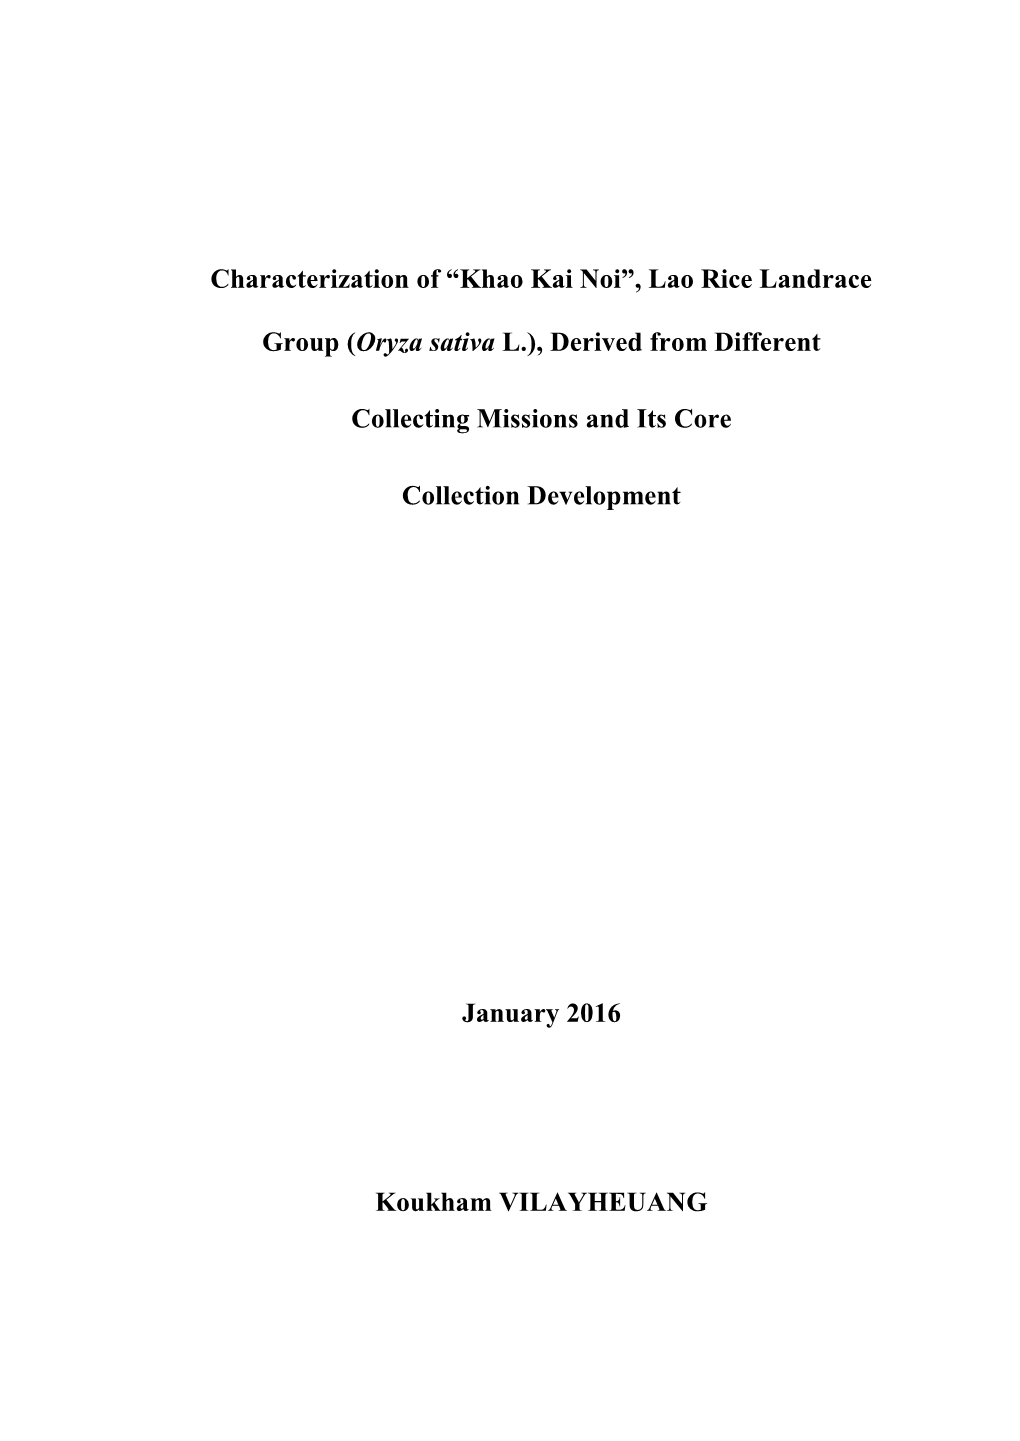 Characterization of “Khao Kai Noi”, Lao Rice Landrace Group (Oryza